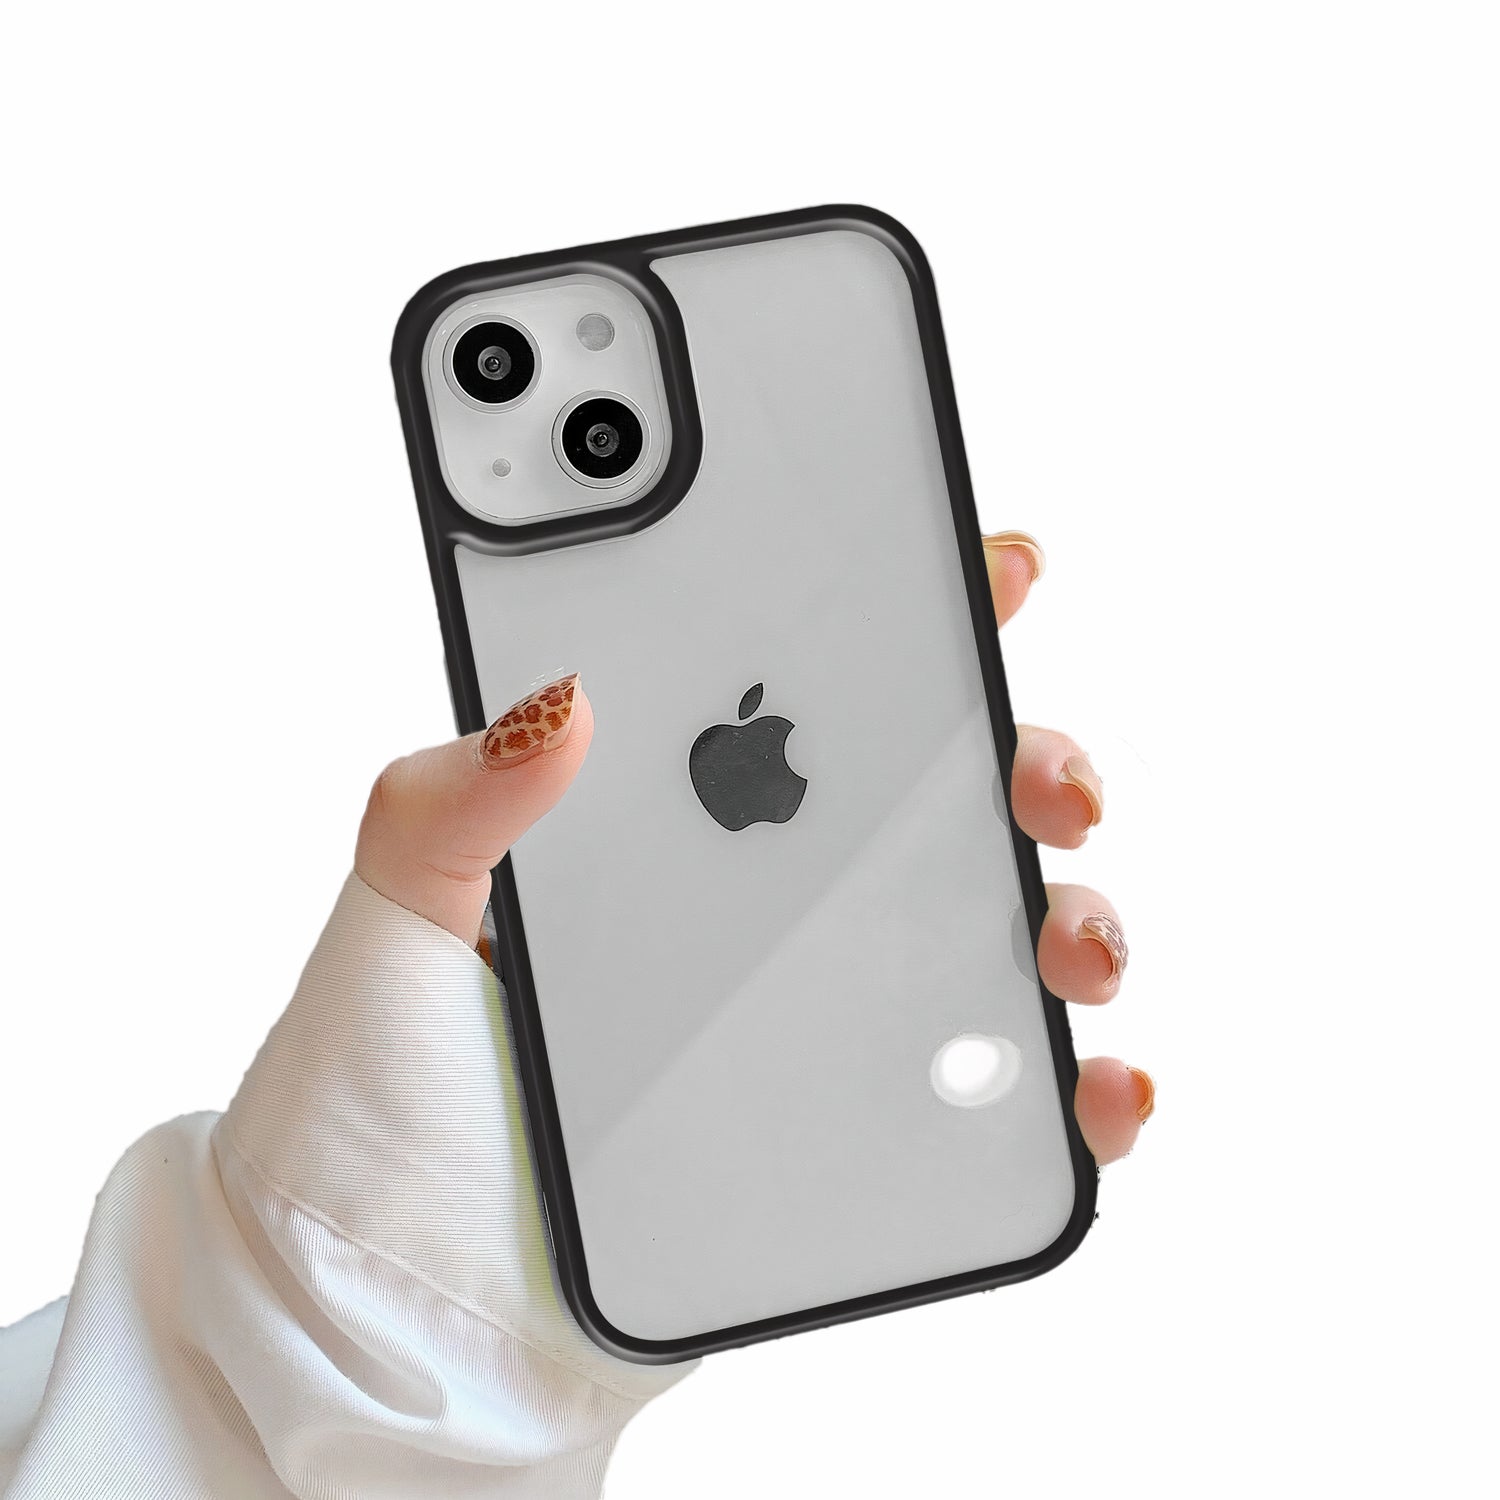 Carcasa transparente borde color iphone 12 pro max